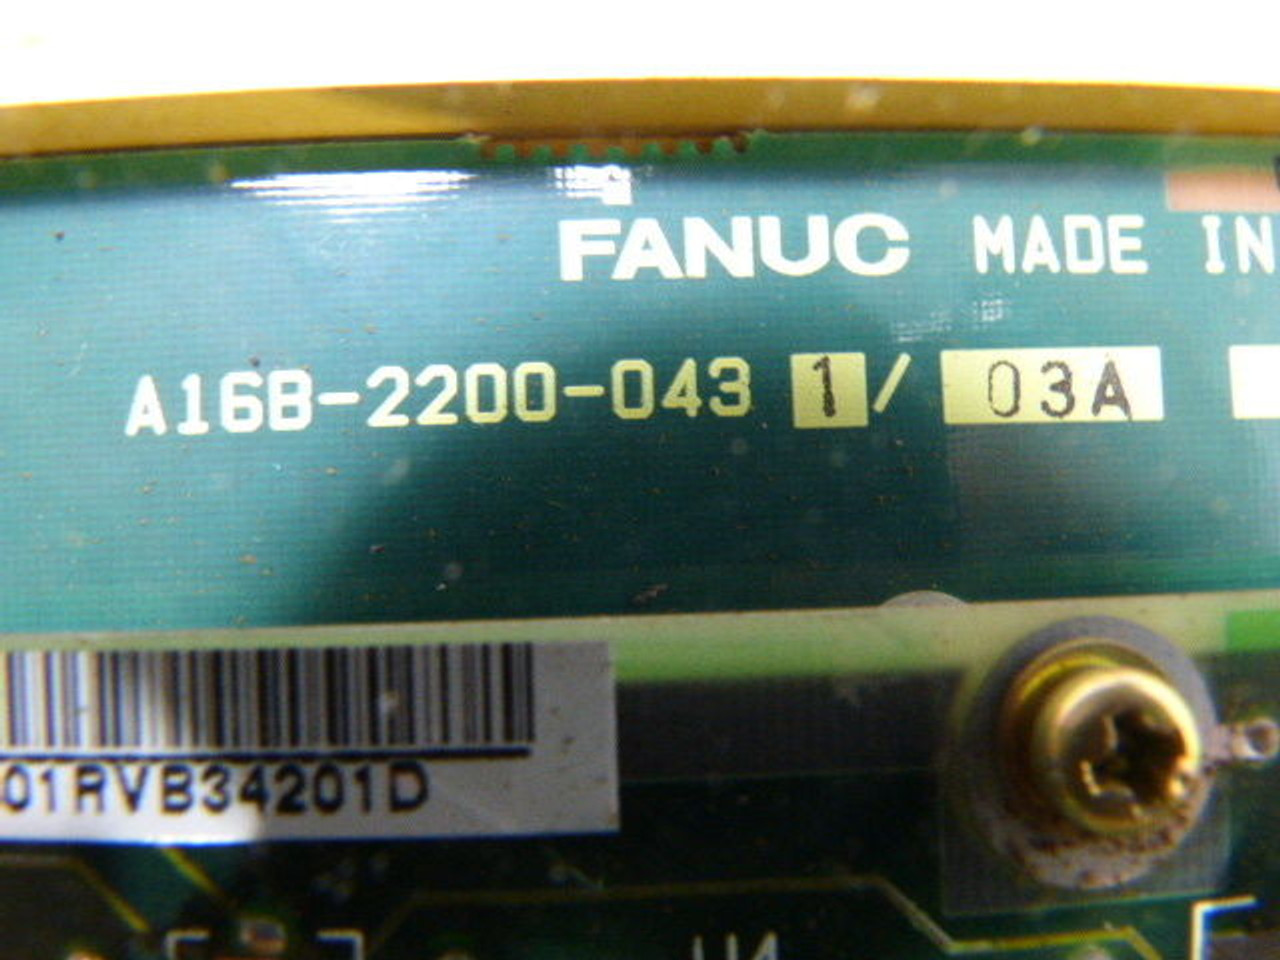 GE Fanuc A16B-2200-0431/03A Remote I/O Mother Board USED